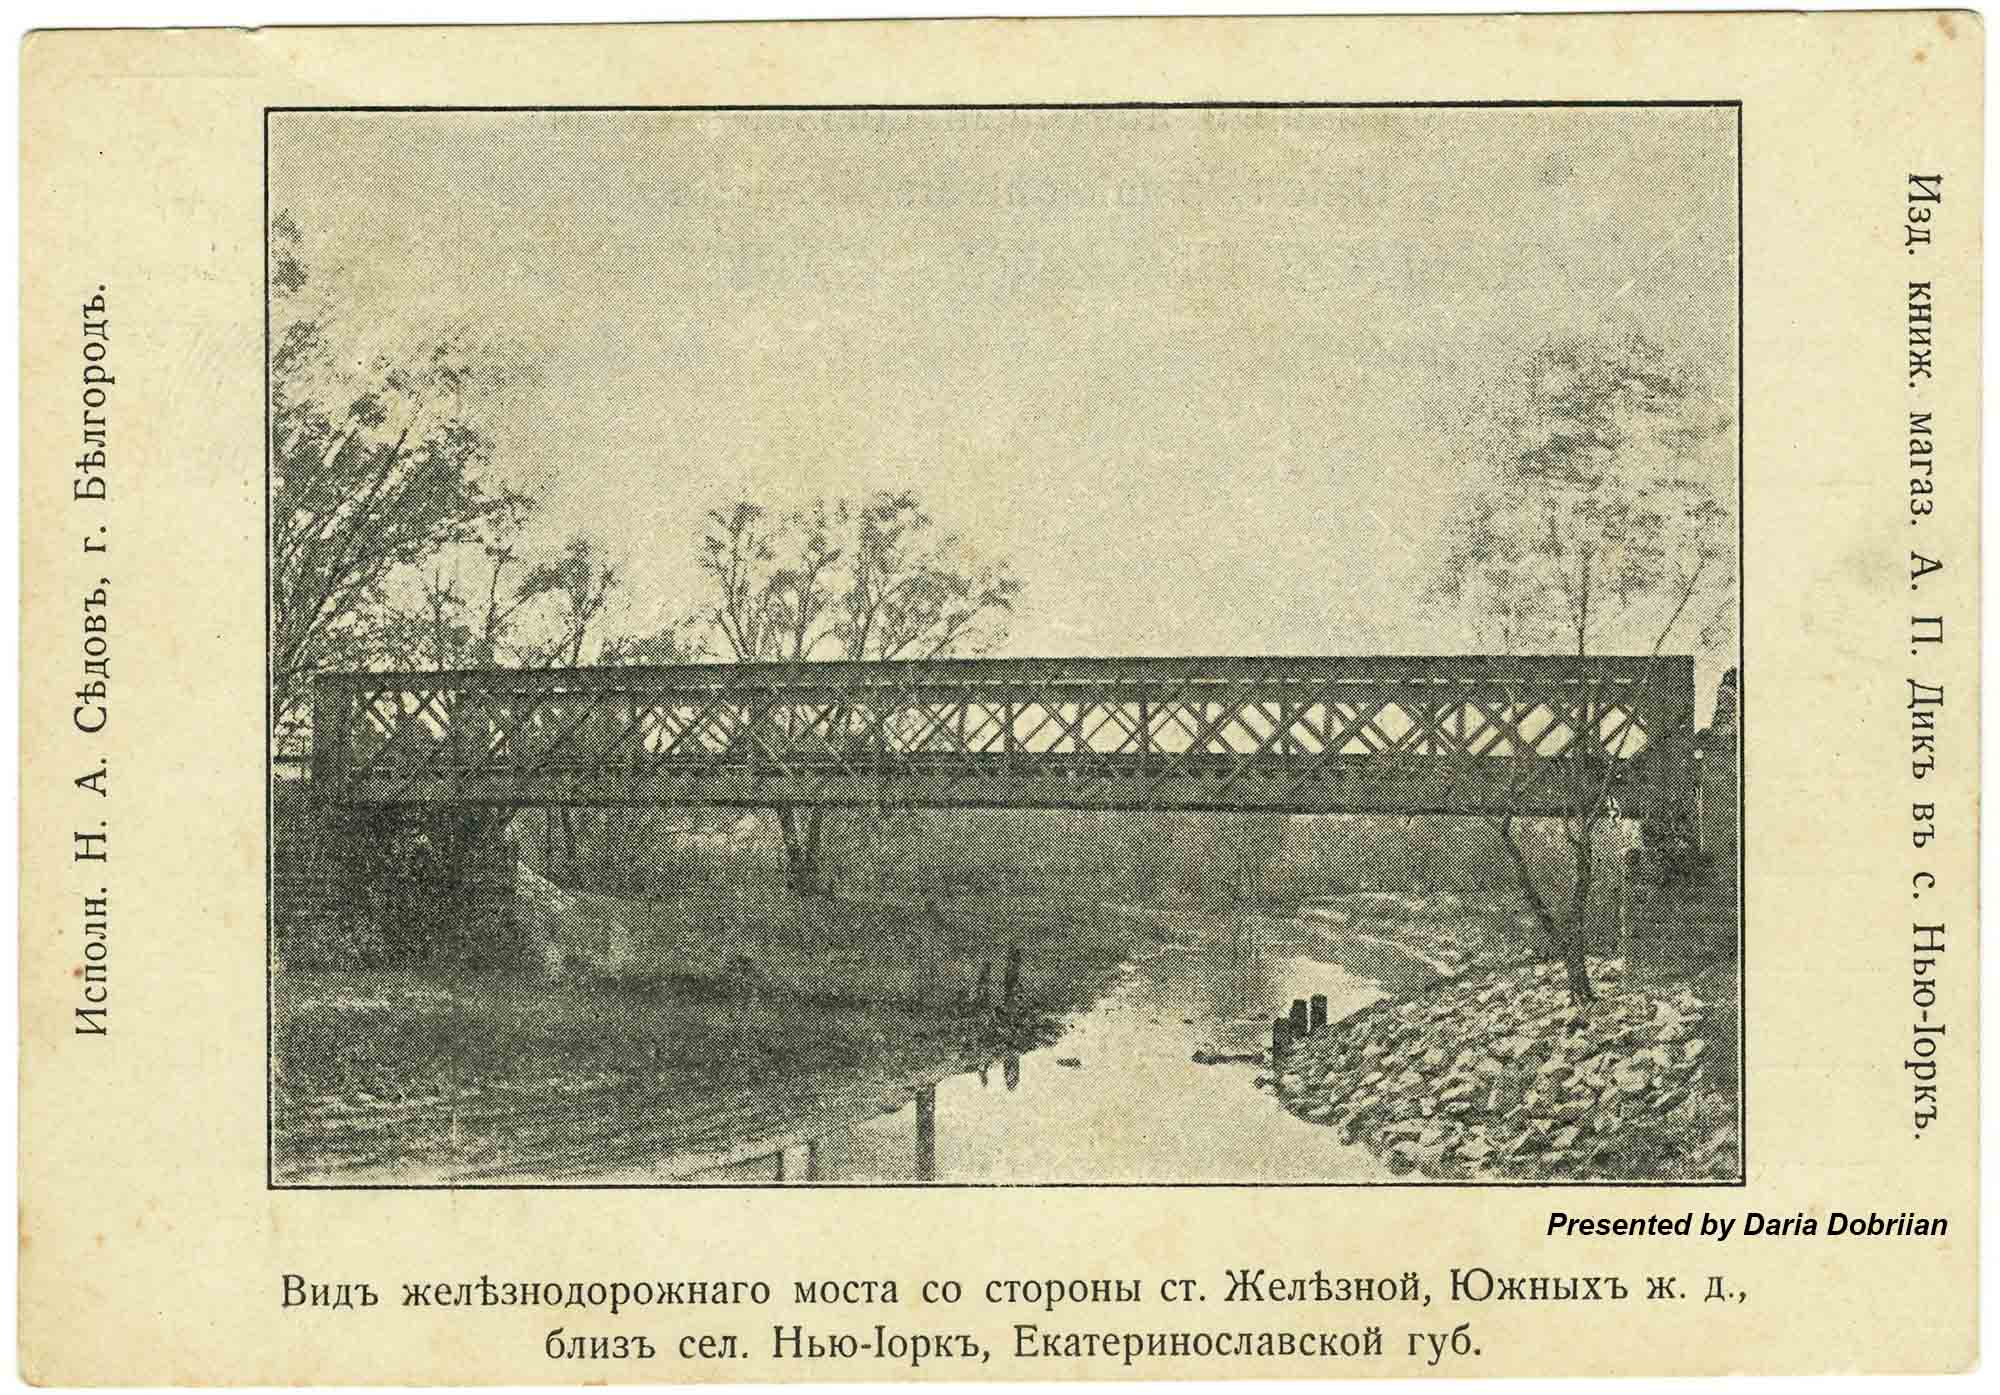 railway bridge New York, Ukraine